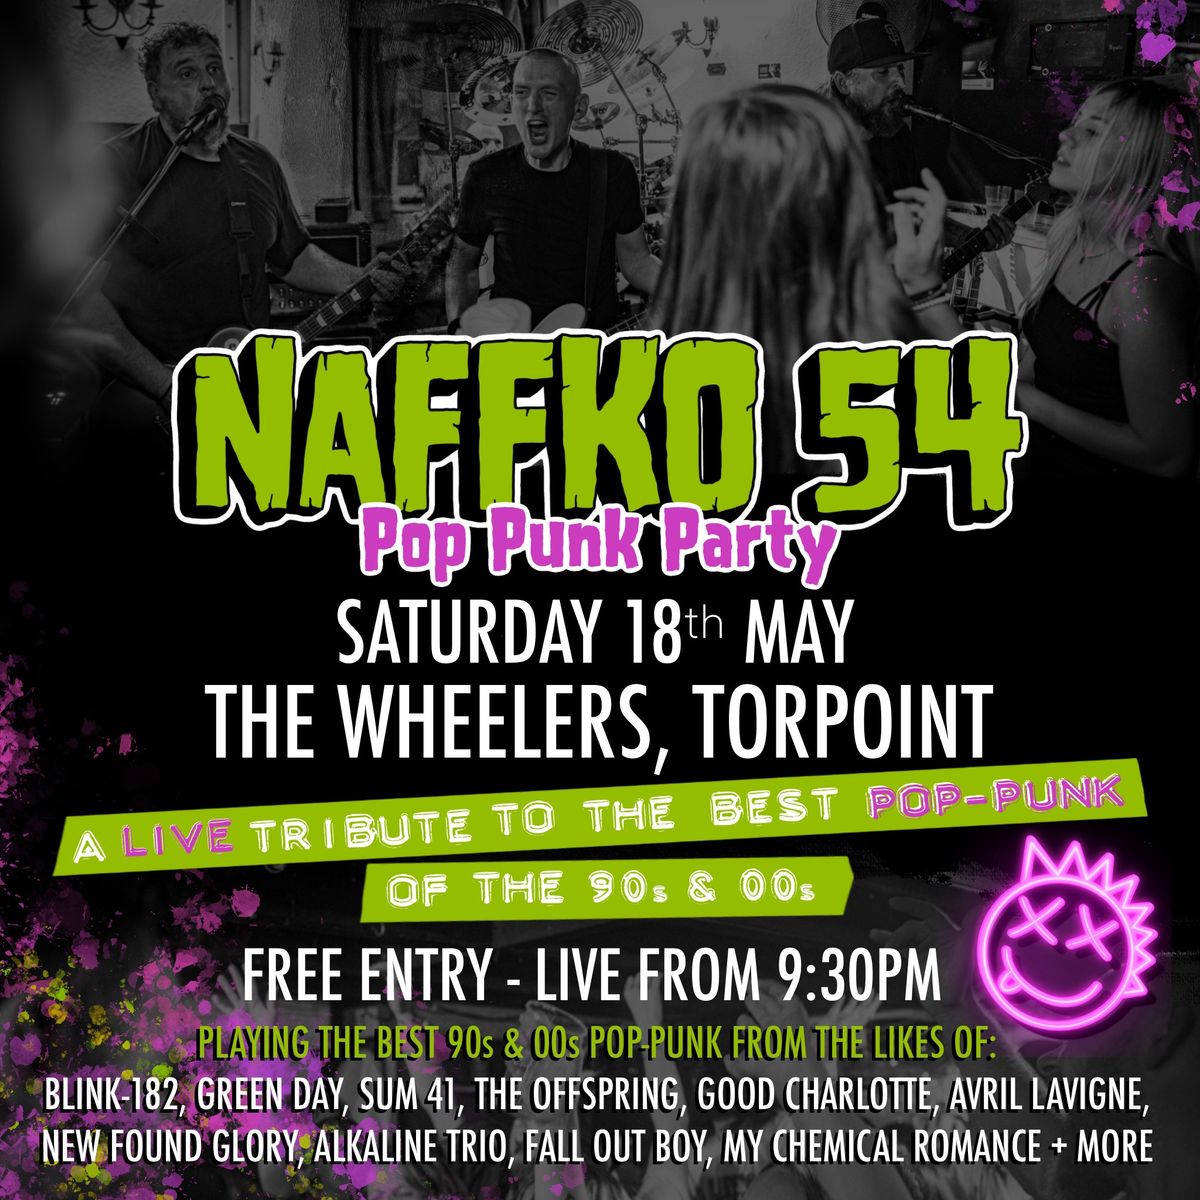 NaffKo 54 - Live Pop Punk @ The Wheelers - Torpoint